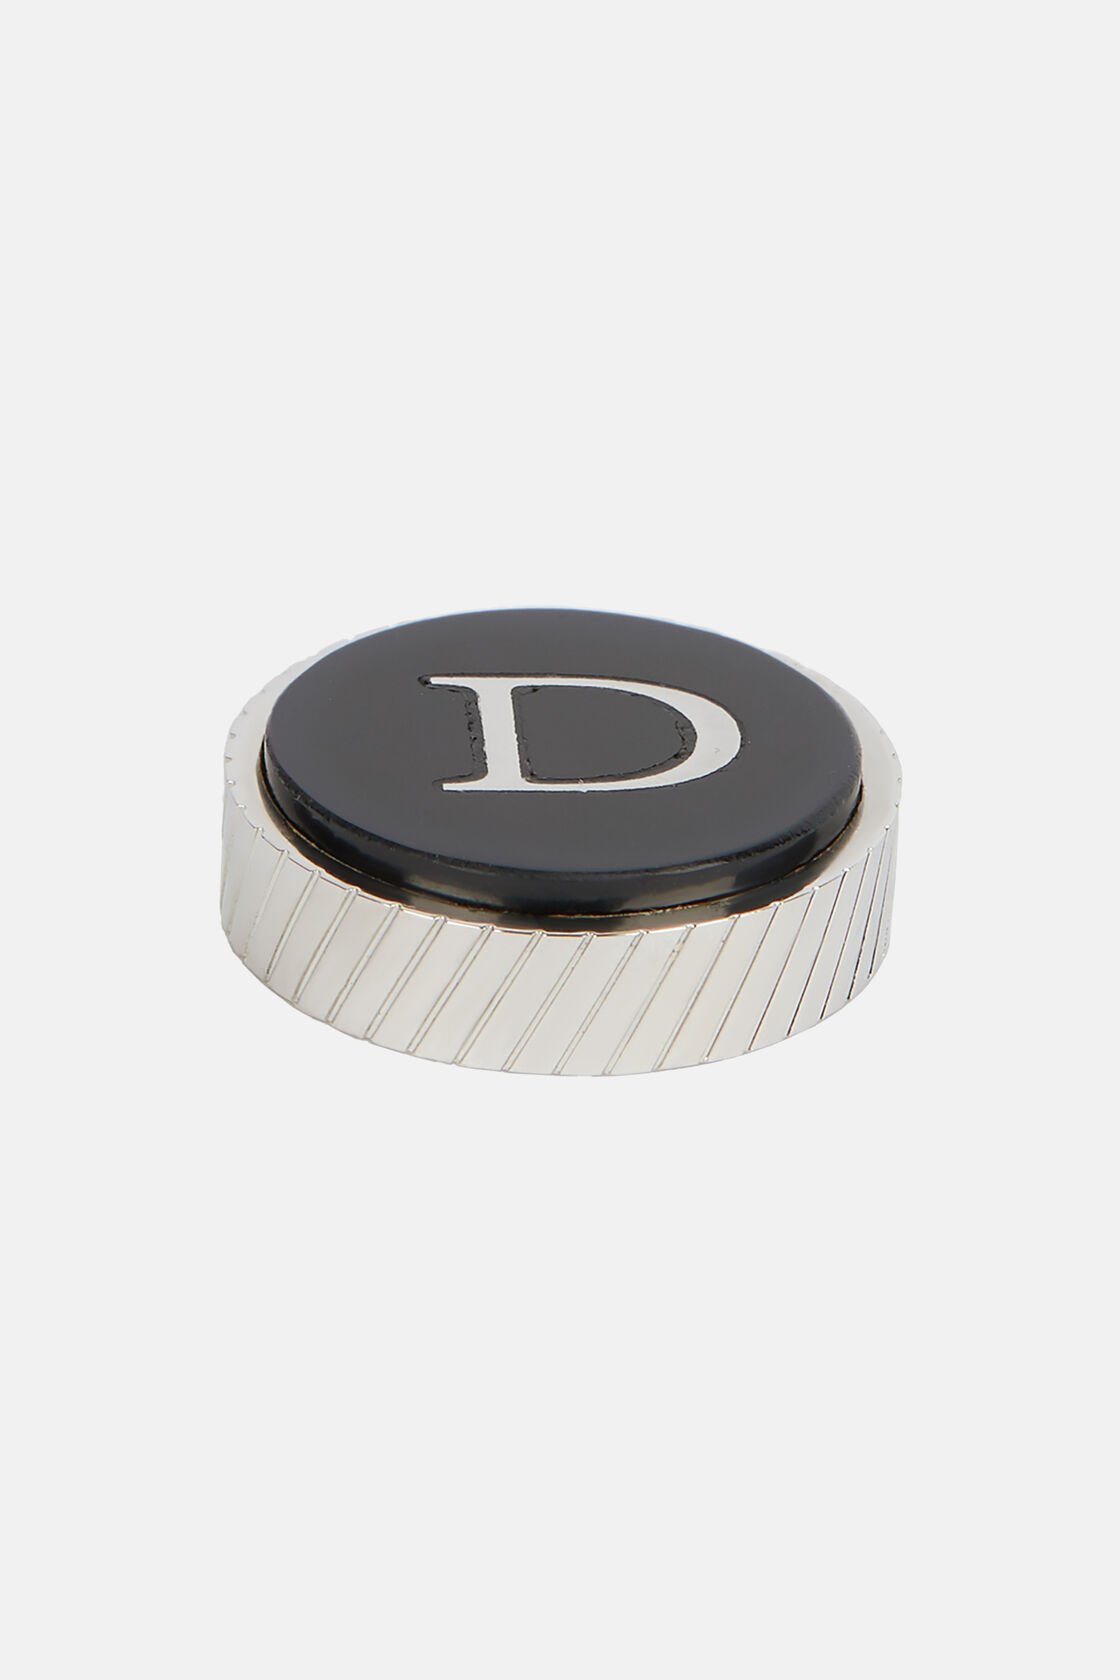 Circular letter d for cufflinks, Black, hi-res